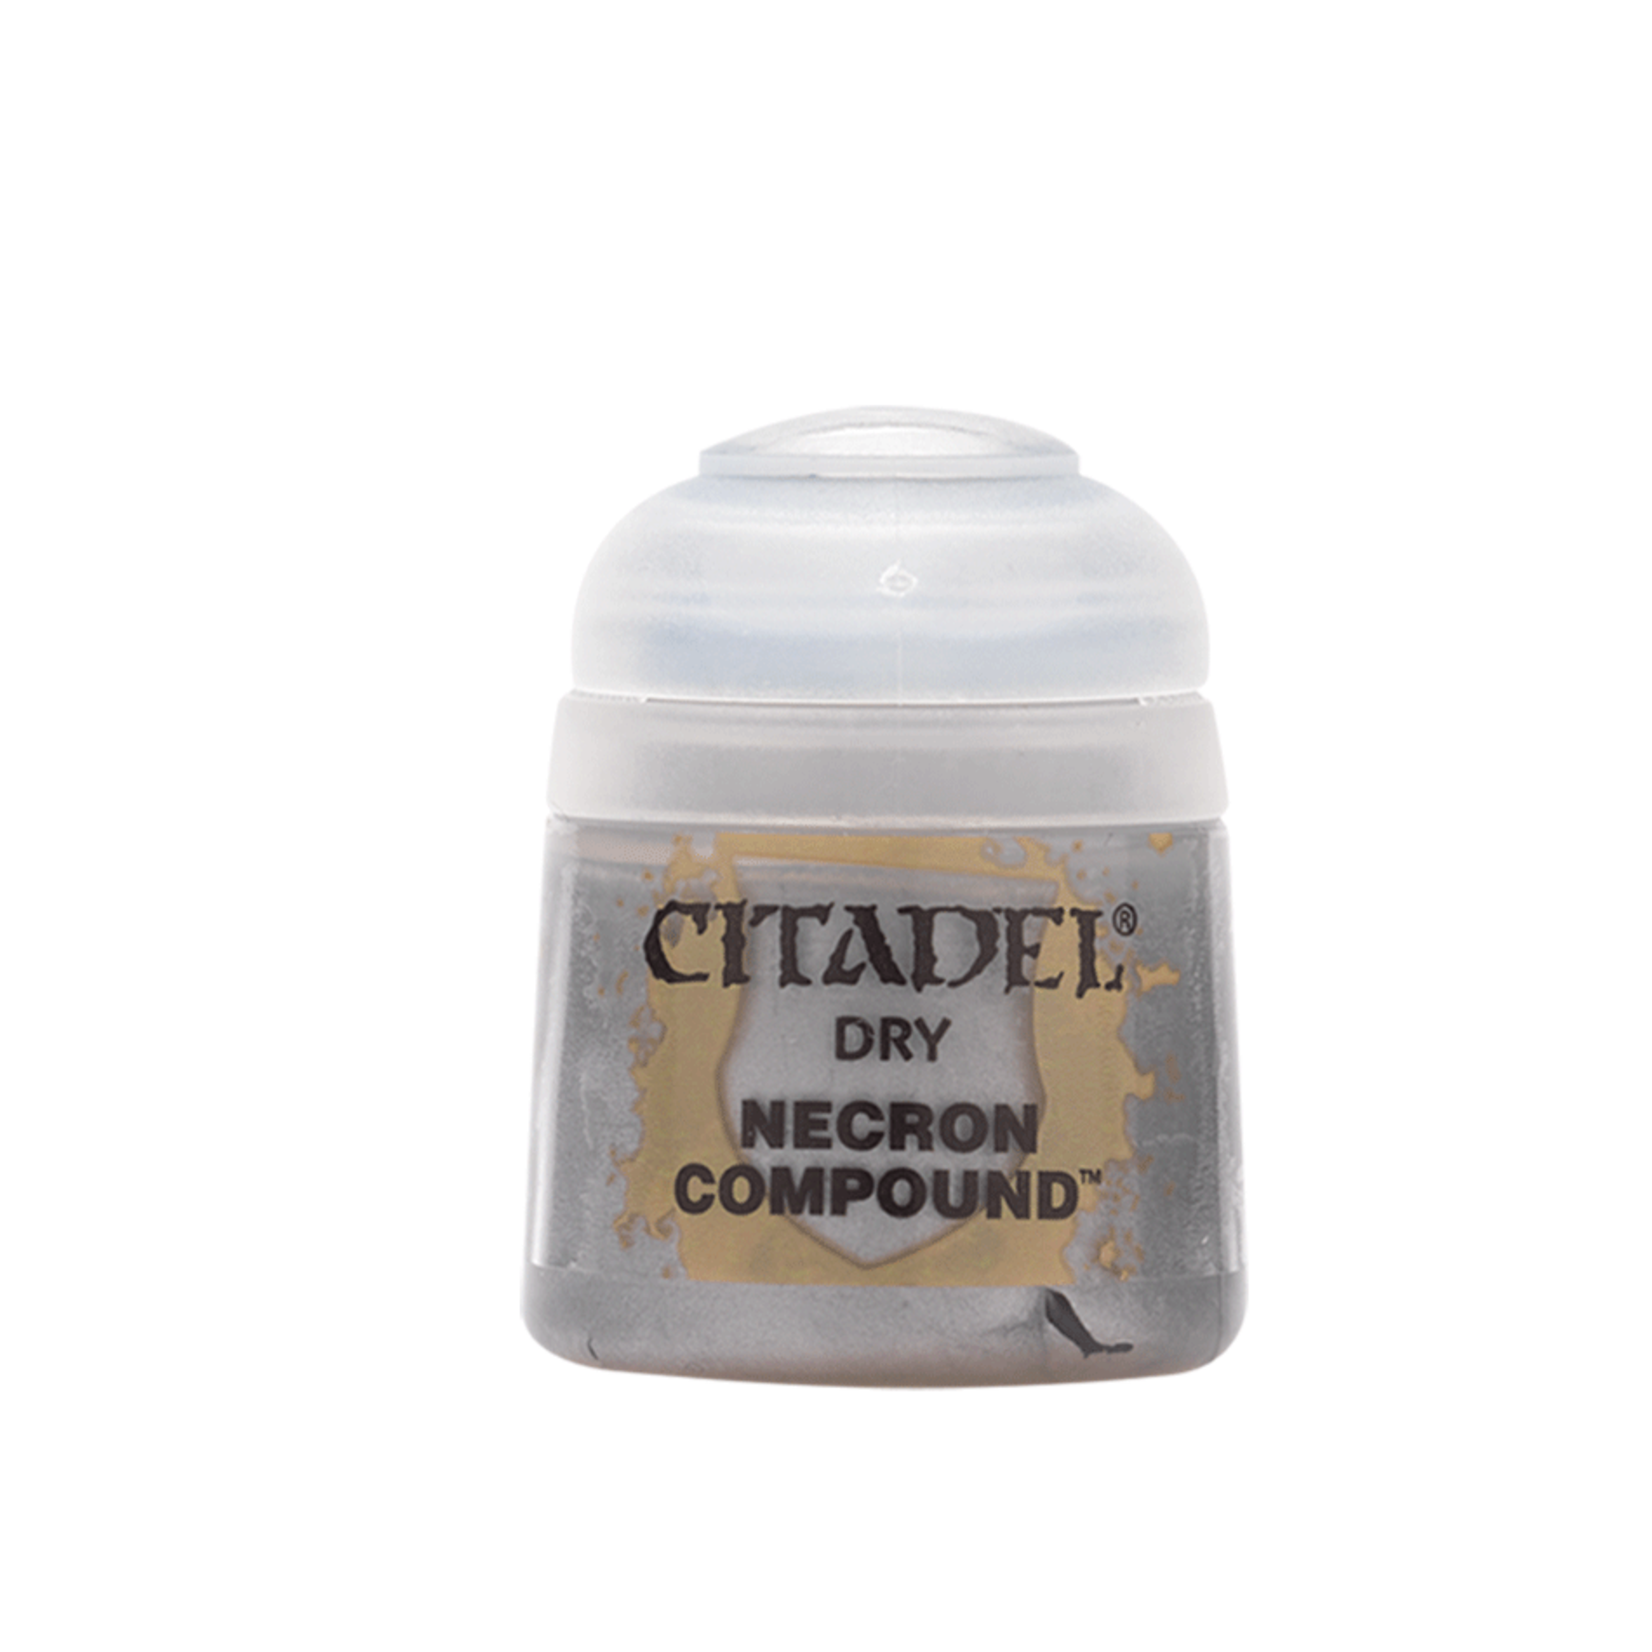 Citadel Dry Necron Compound 12ml pot